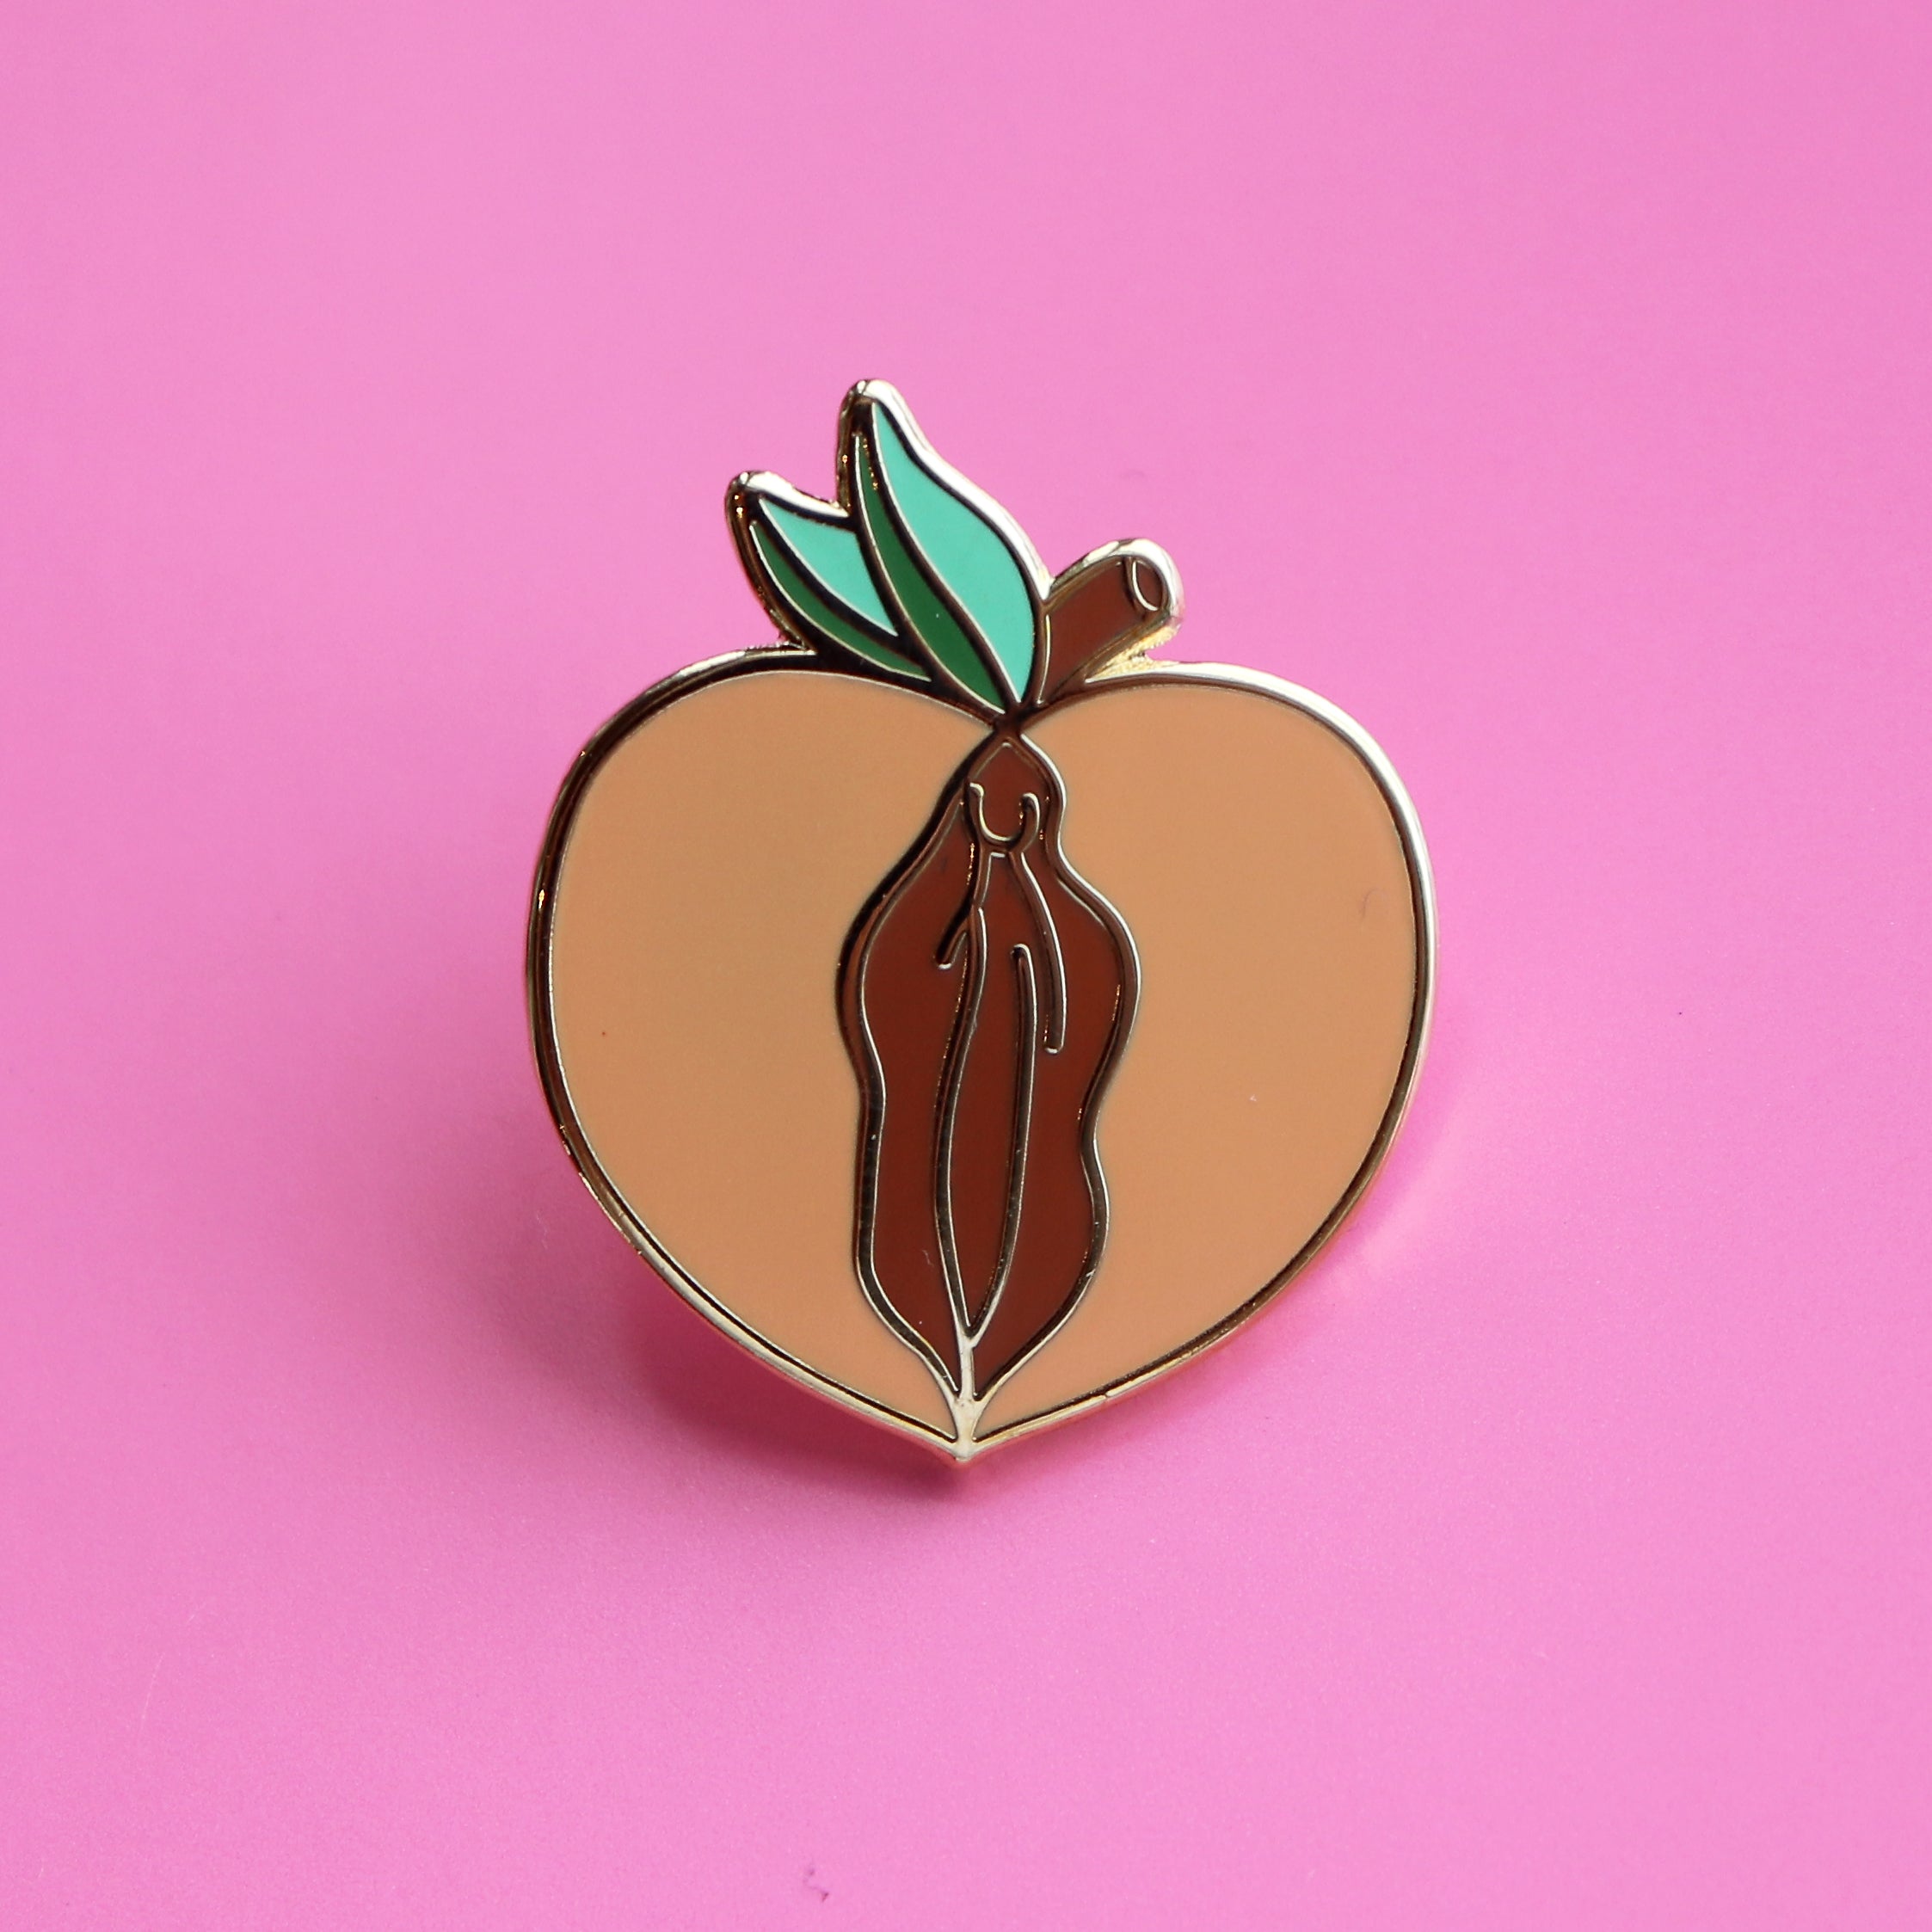 Peach (Pussy) Enamel Pin